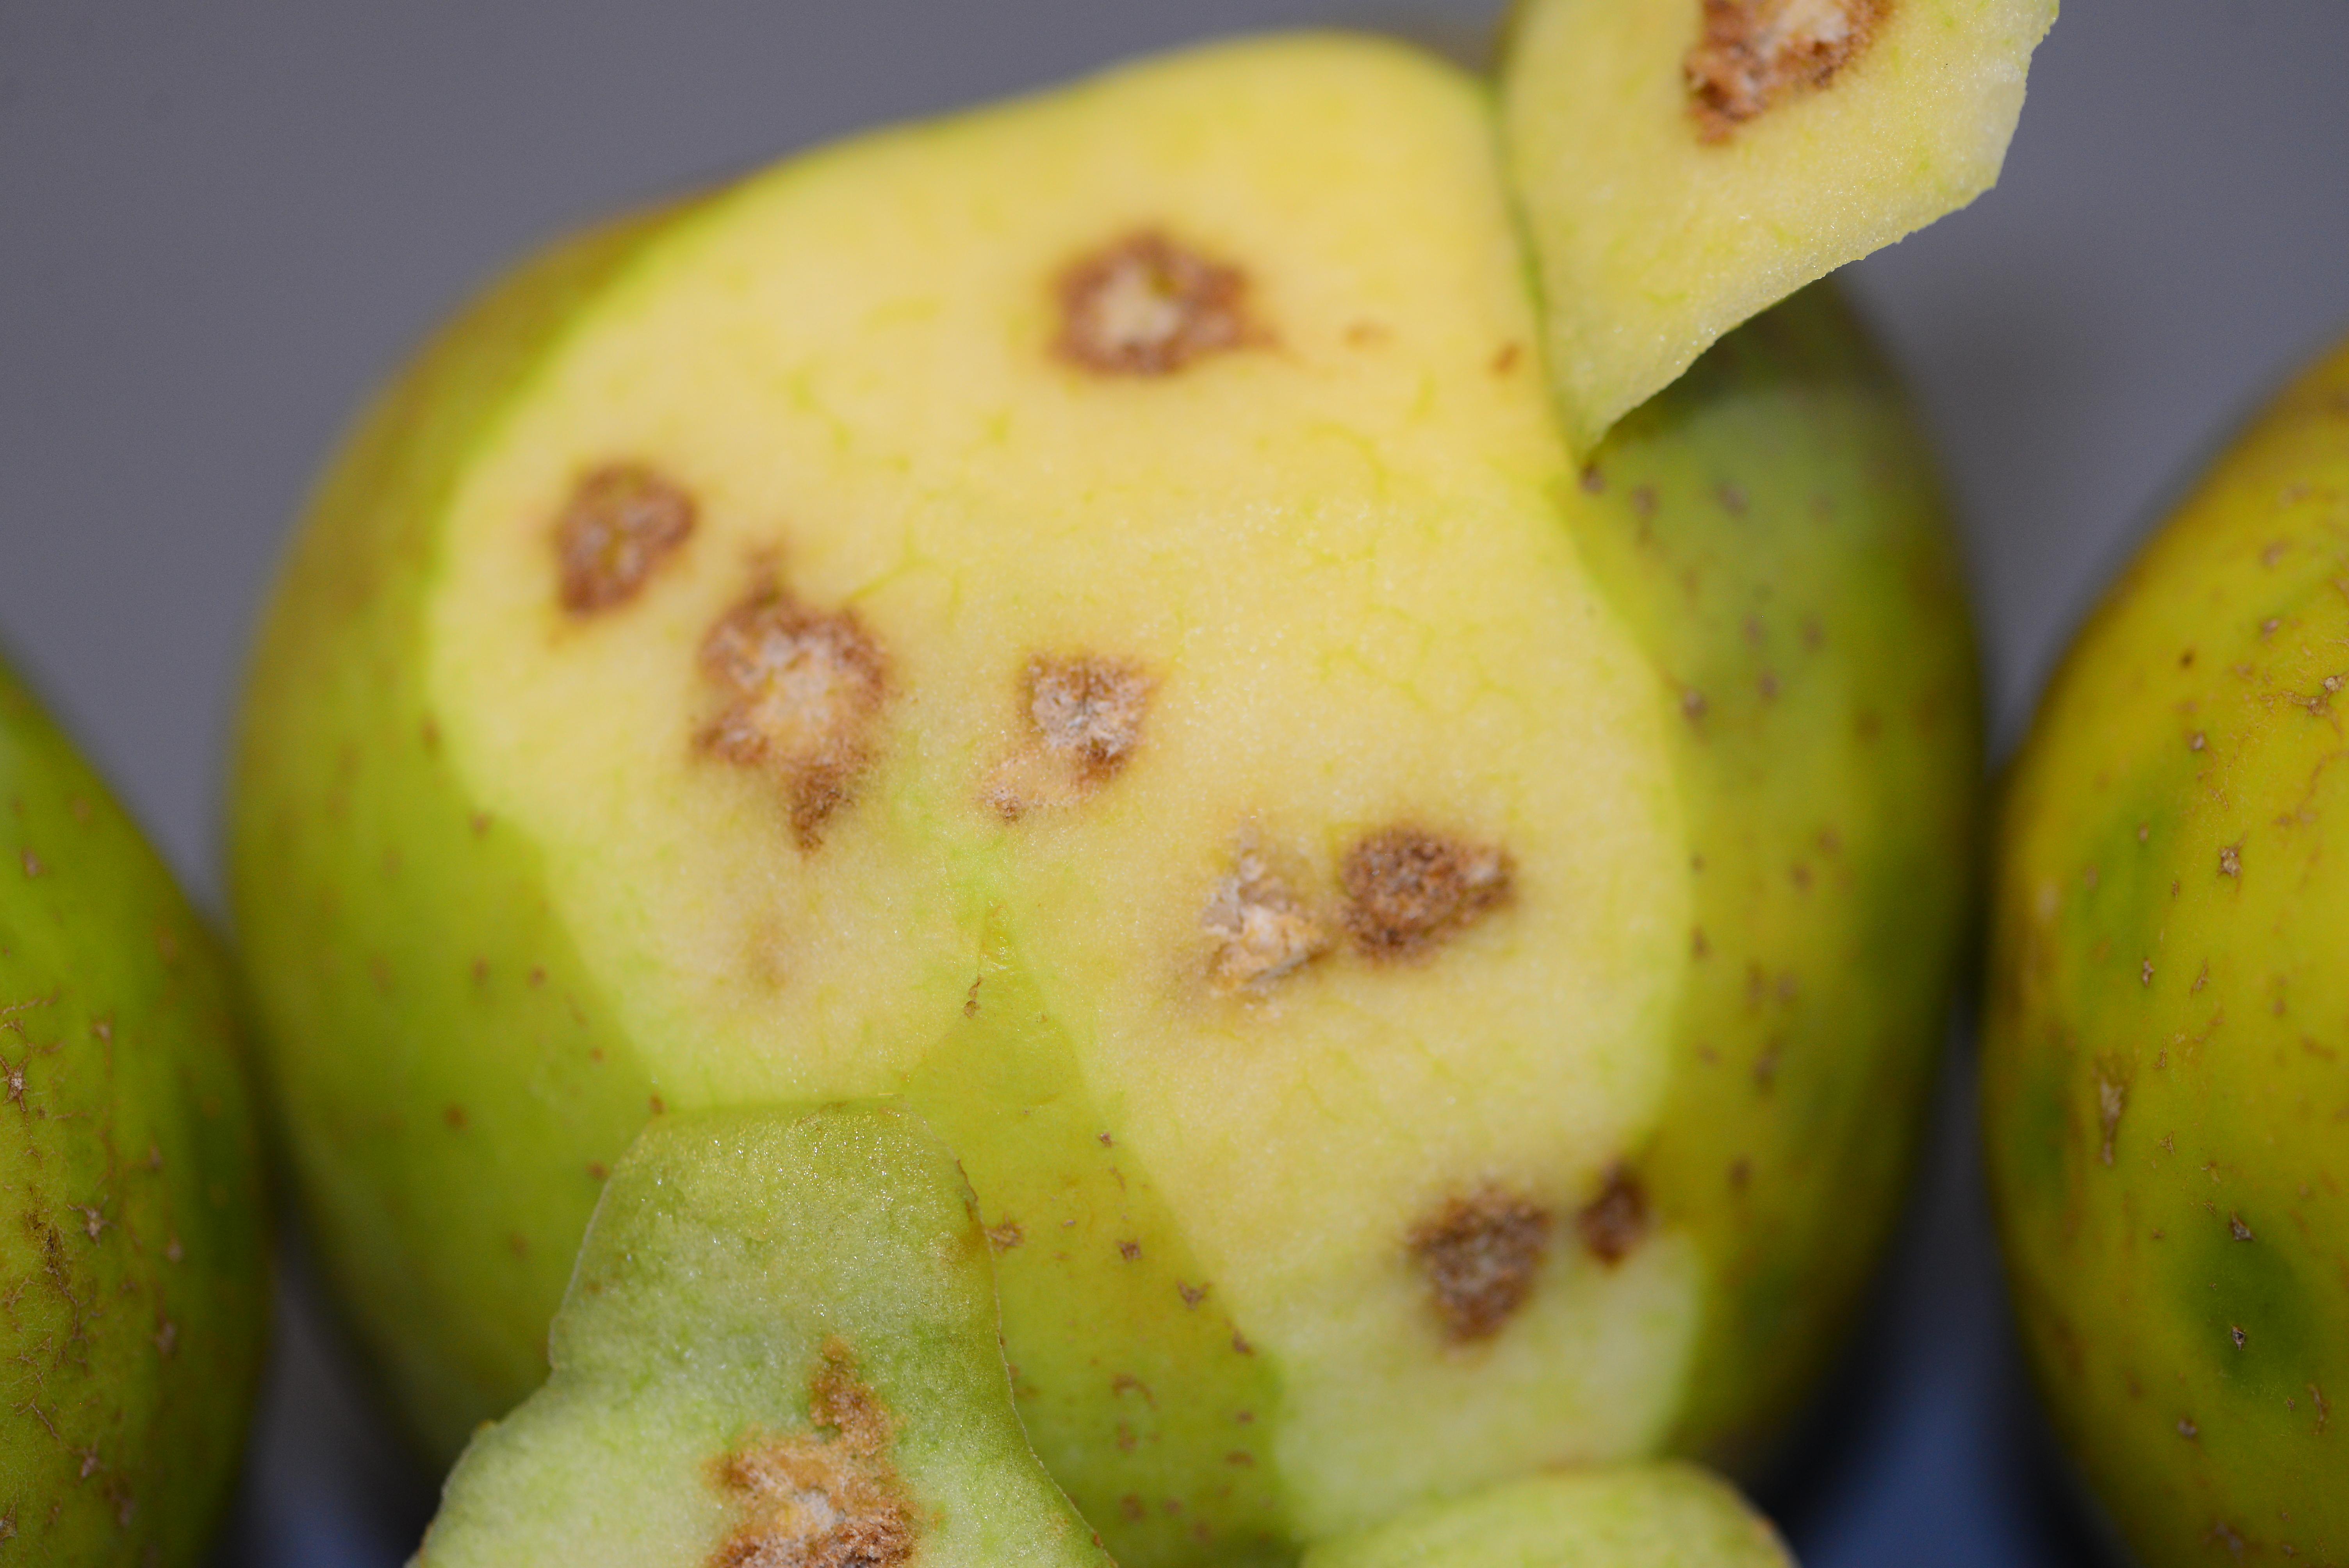 Brown marmorated stinkbug damage to fruit (Bessin, UKY)